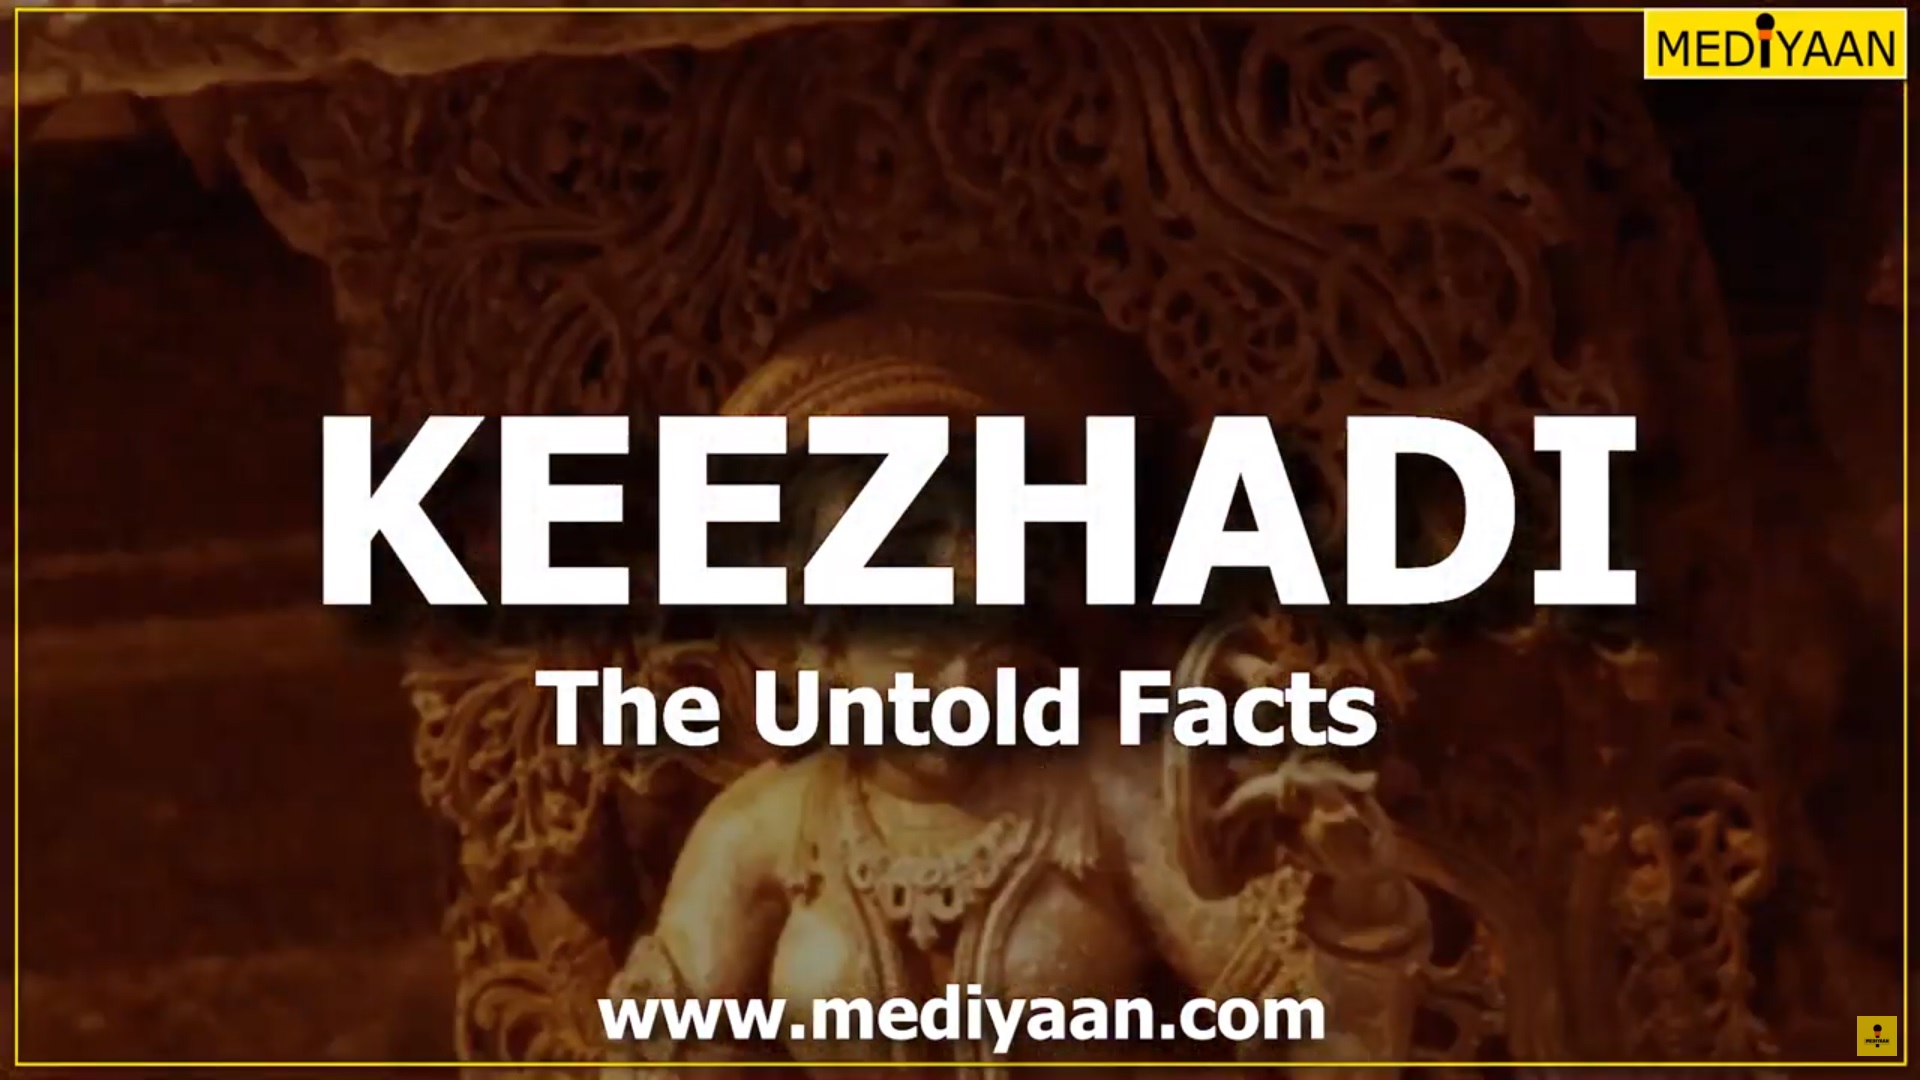 Keezhadi The Untold Facts by DR Hari shankar Part-1